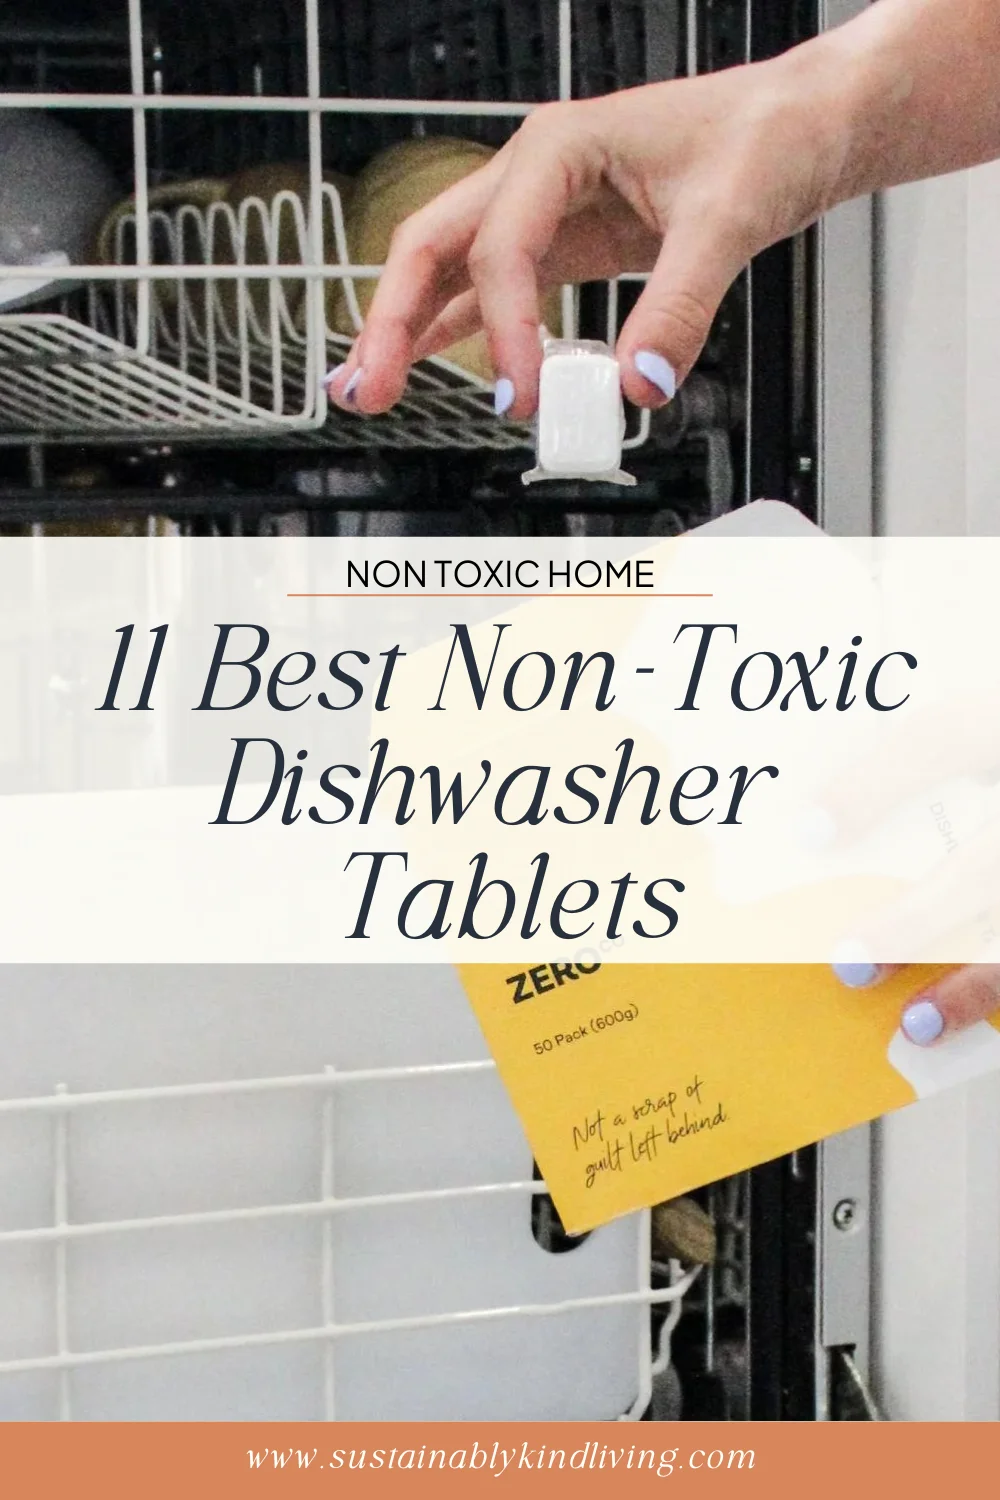 nontoxic dishwasher tablets